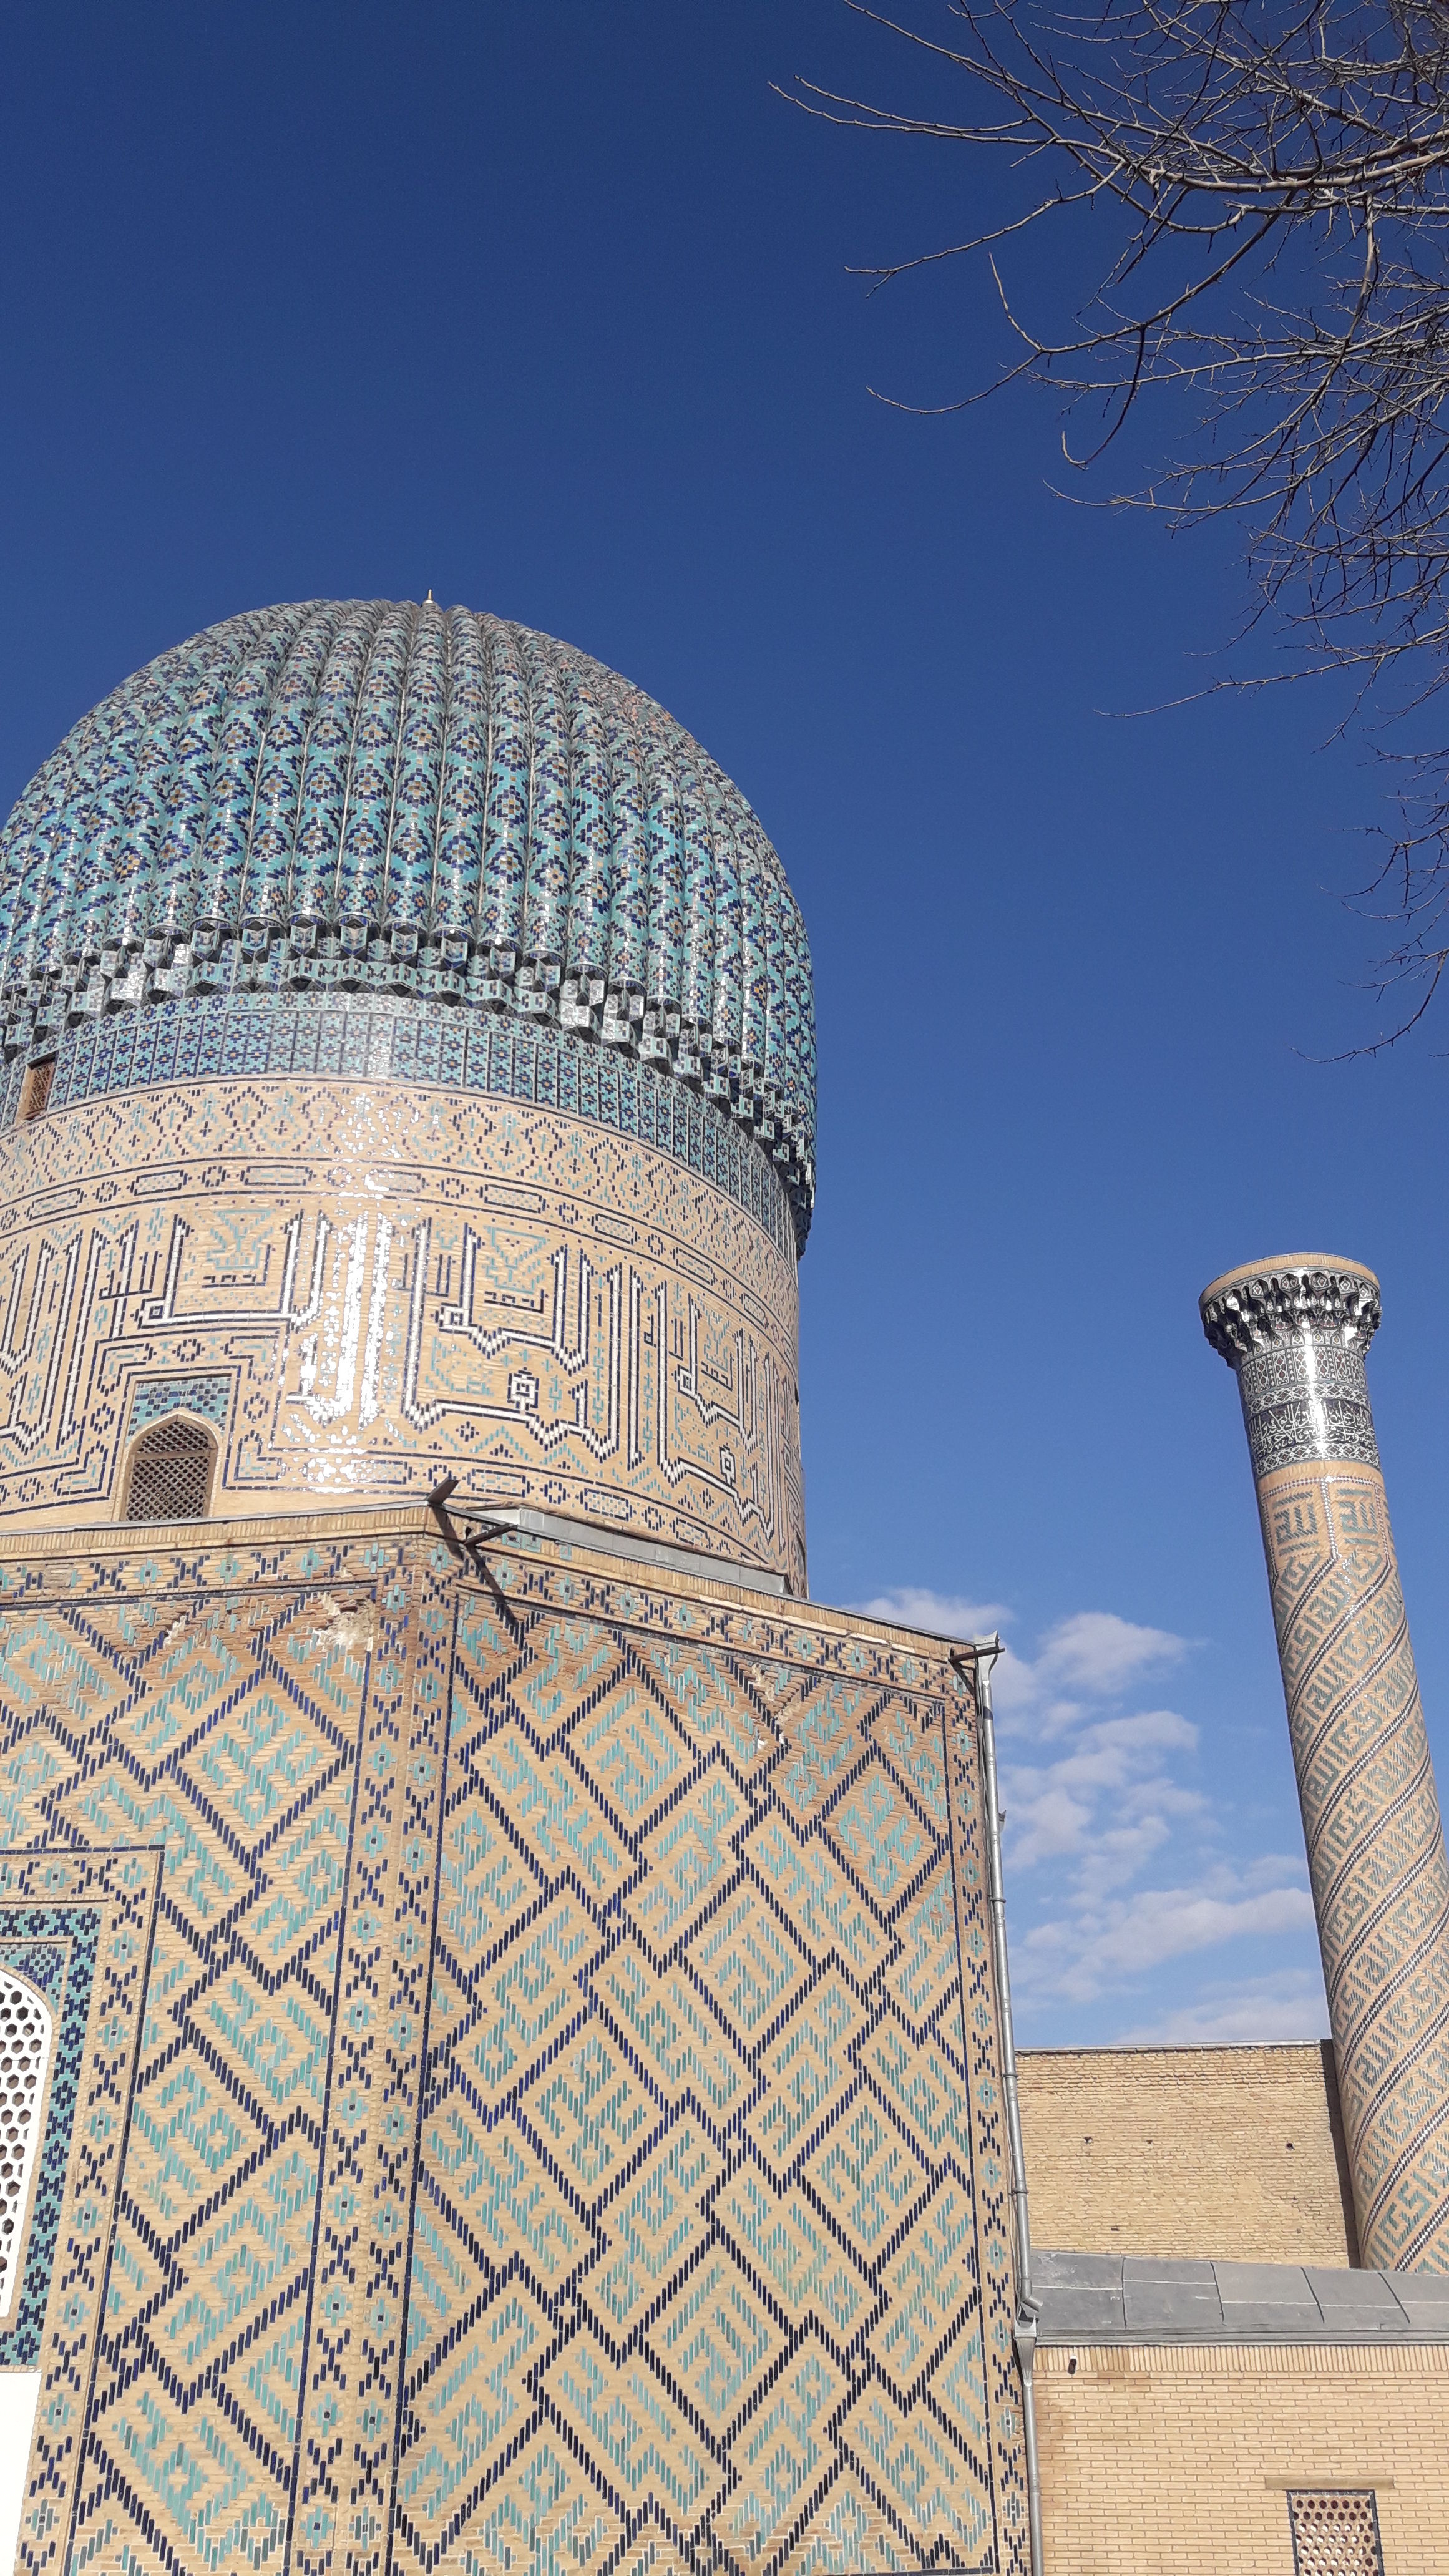 Le dôme turquoise de Samarkand, Gour Emir